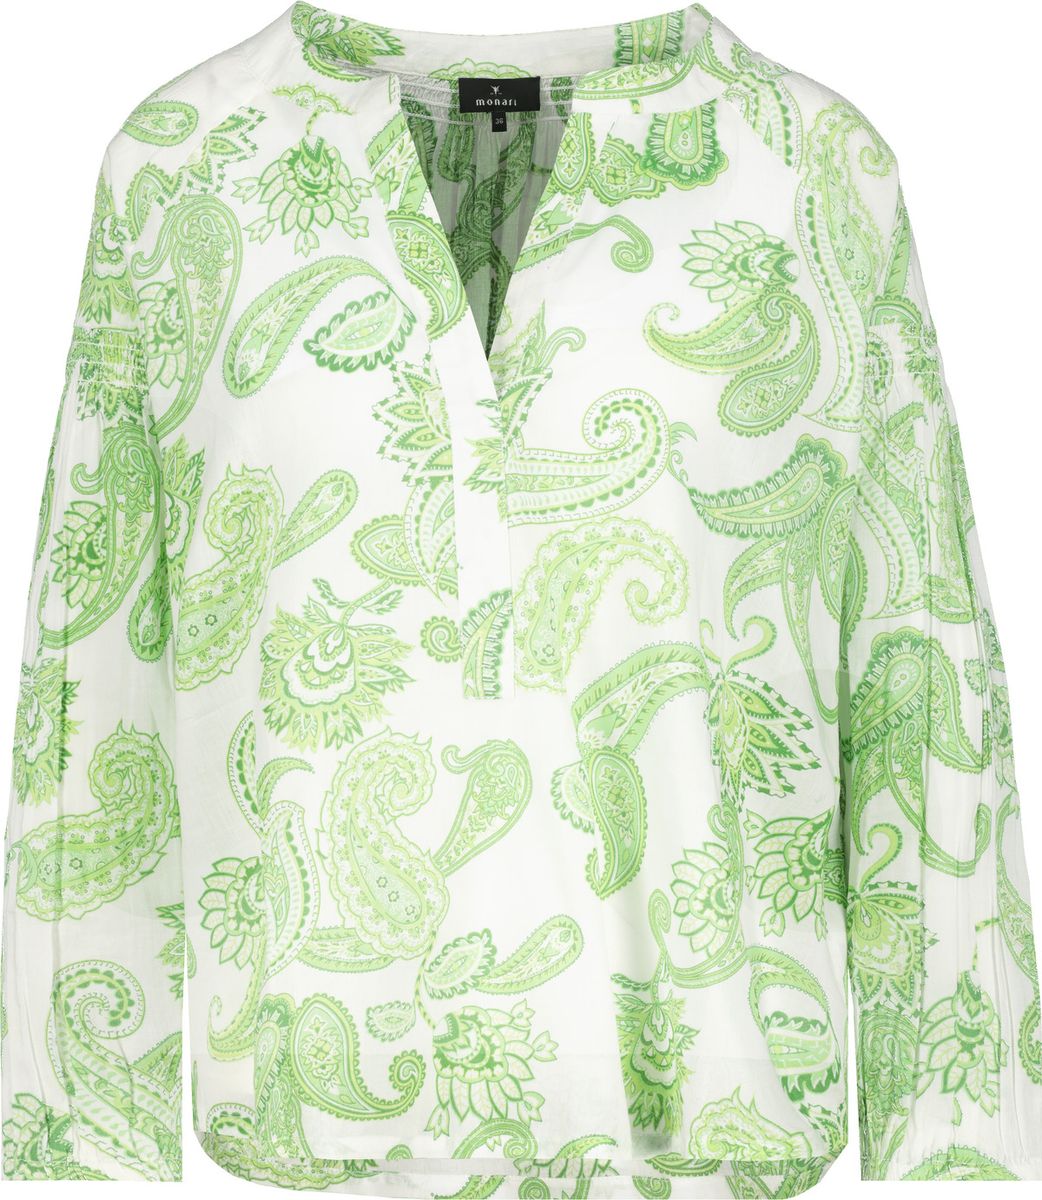 MONARI - Bluse, pastell green gemustert - Modehaus Fahr Onlineshop